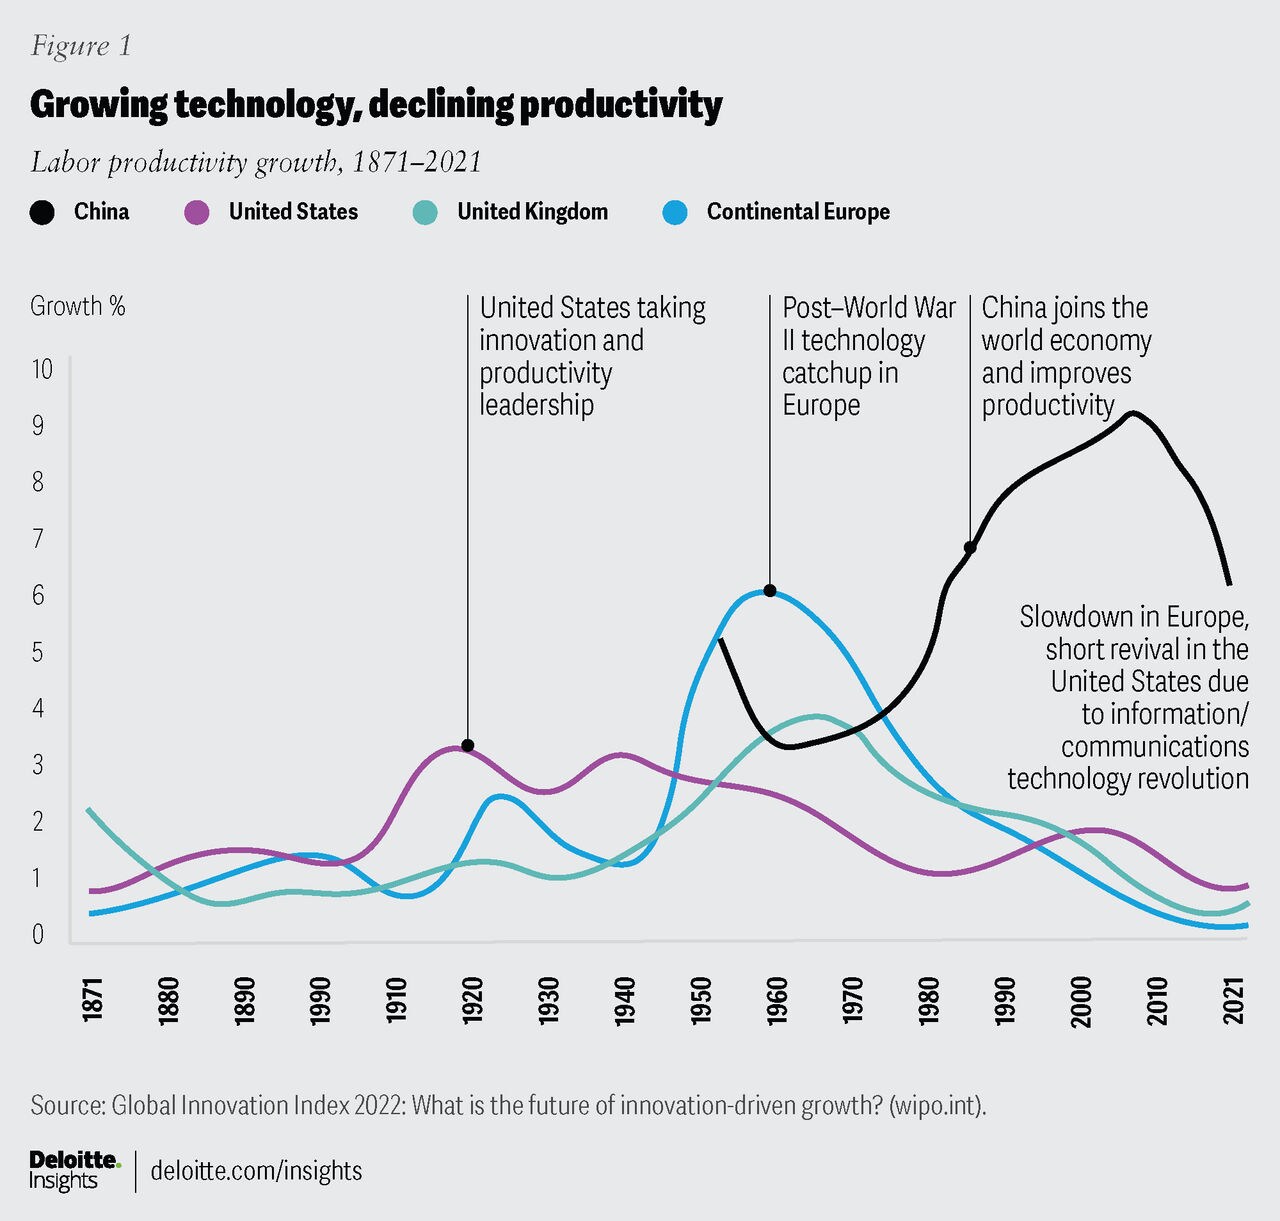 Figure 1. Growing technology, declining productivity